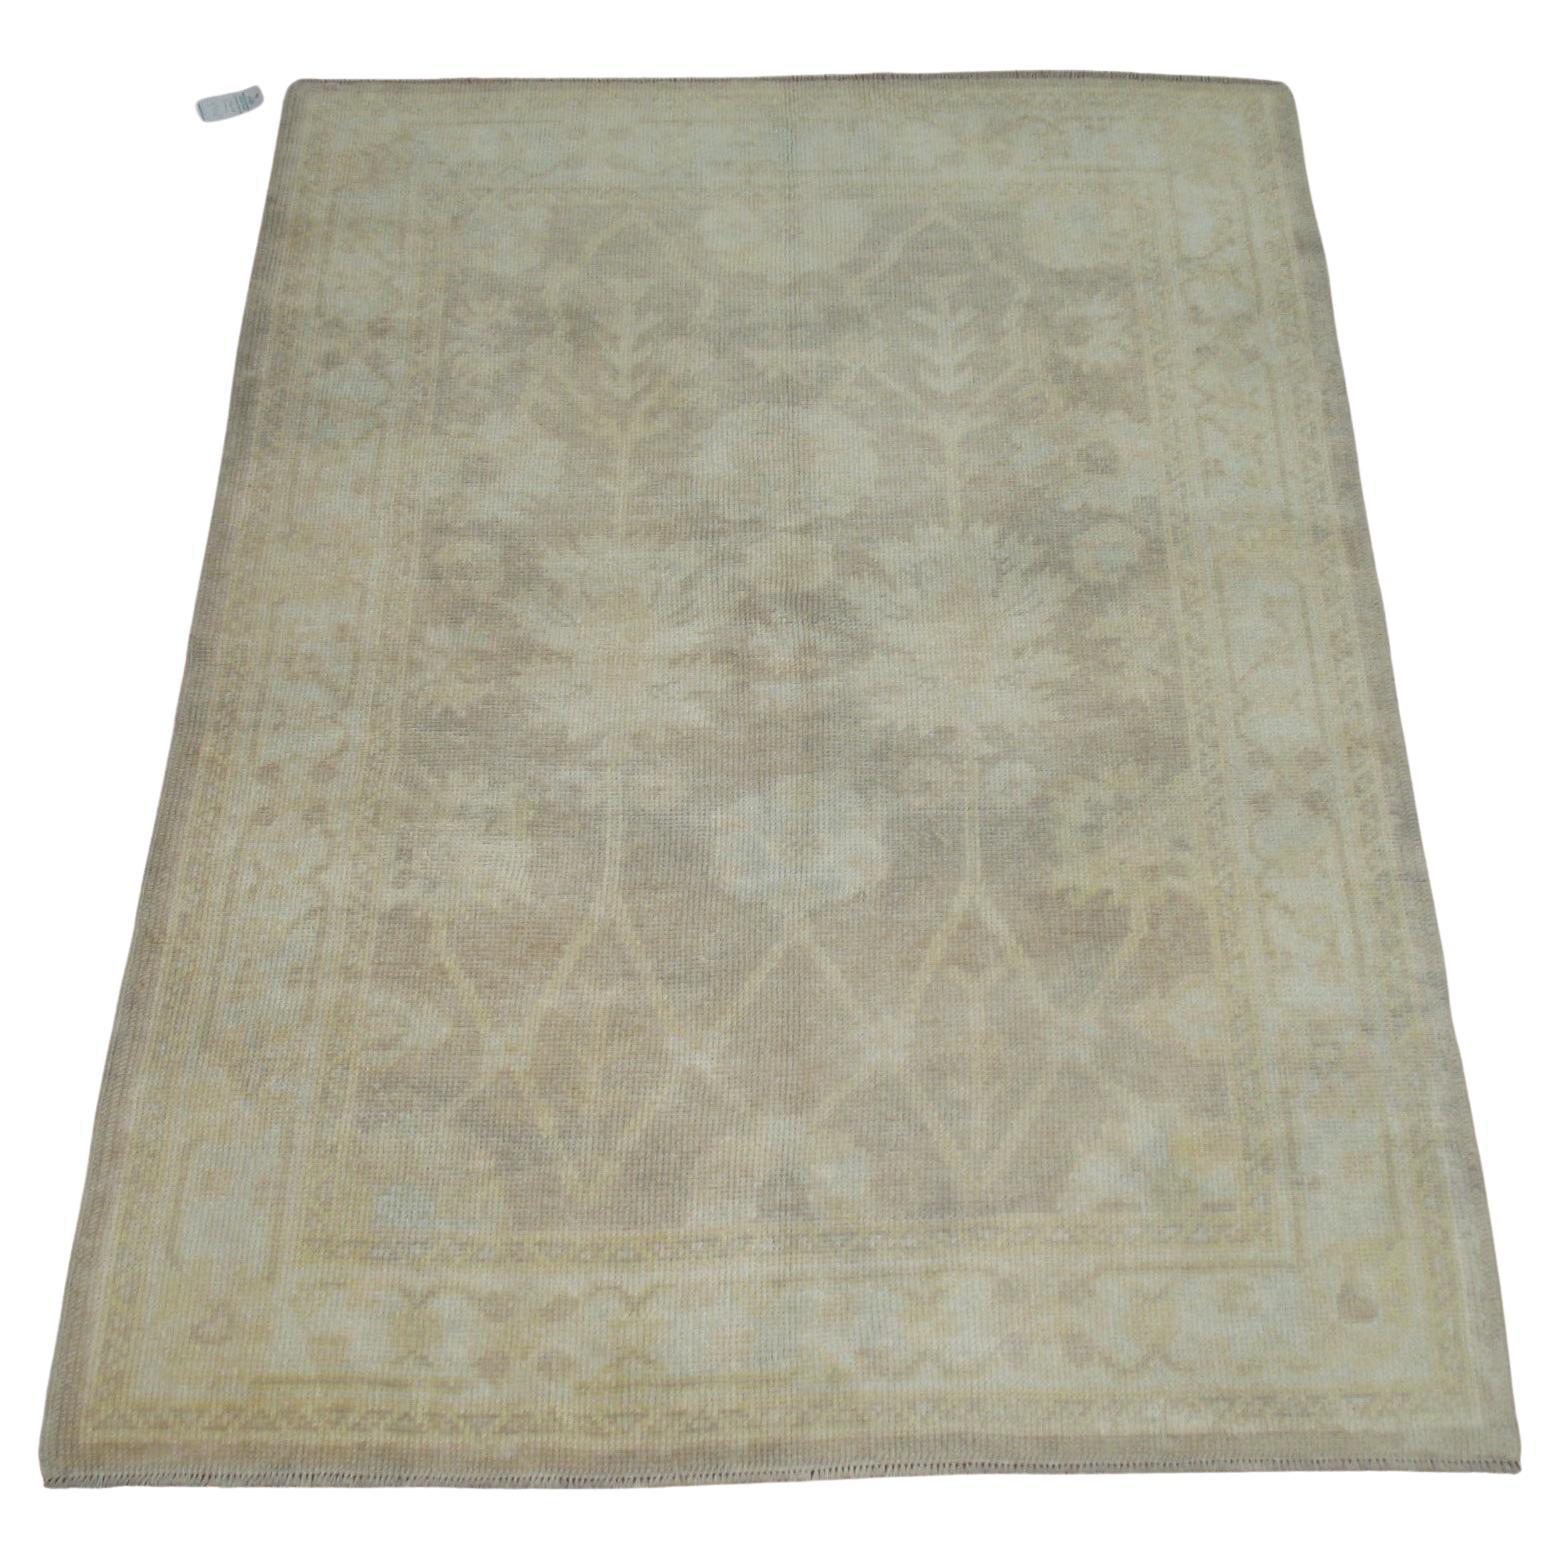 Accent Size Inspired Vintage Turkish Oushak Carpet

4'2'' x 6'2''